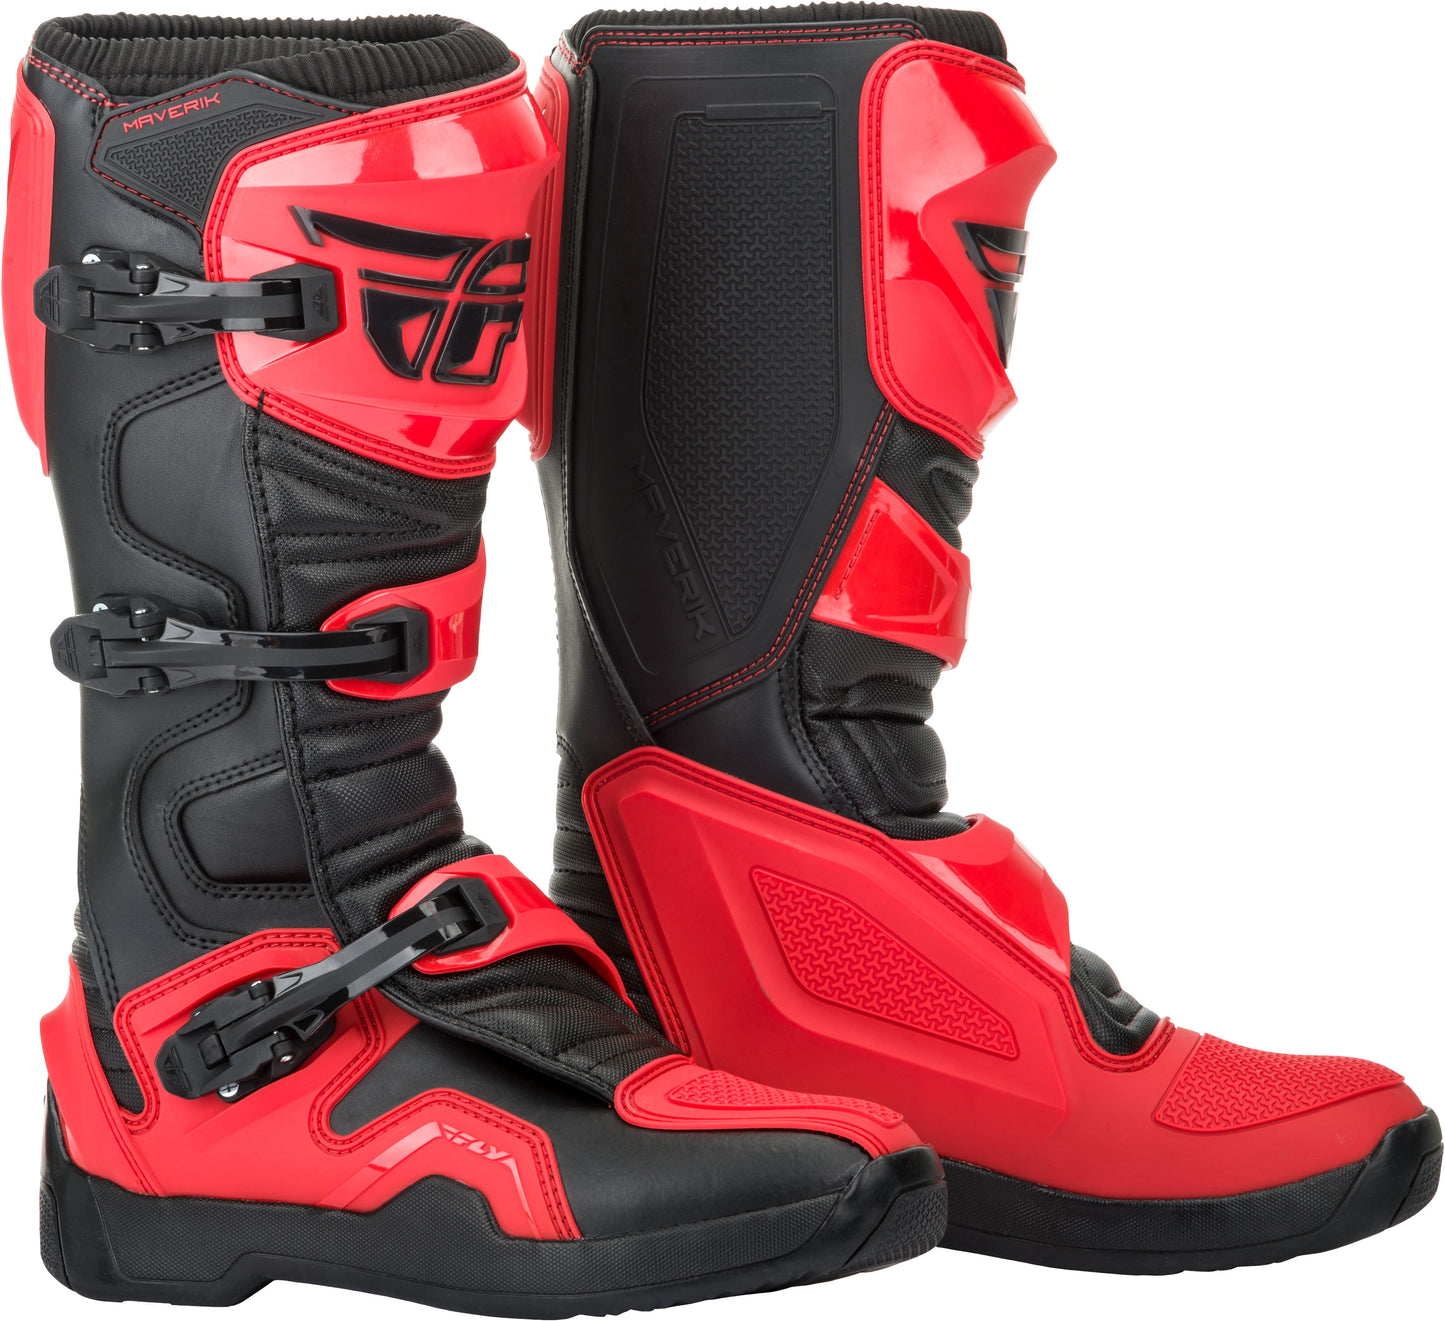 Maverik Boots Red/Black